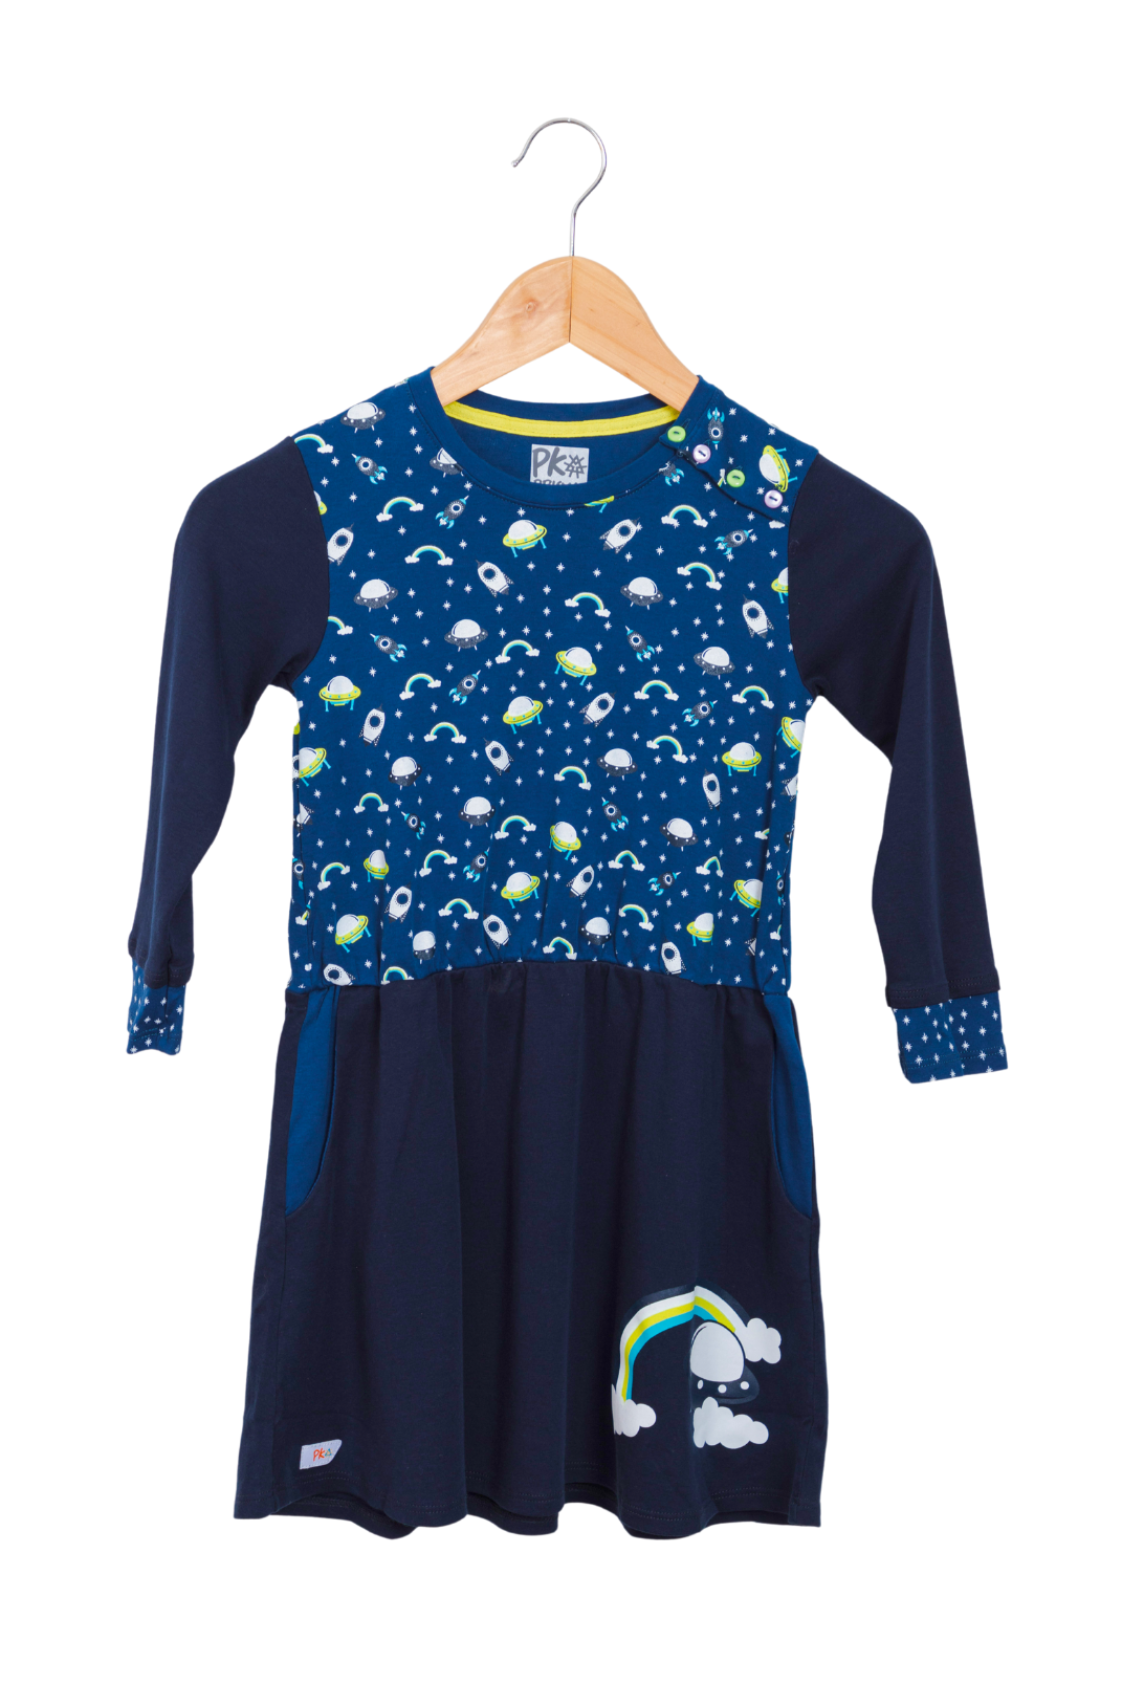 Blue rainbow pocket dress - Prisma Kiddos, sustainable kids fashion, hands me down, organic cotton. Creative Clothing